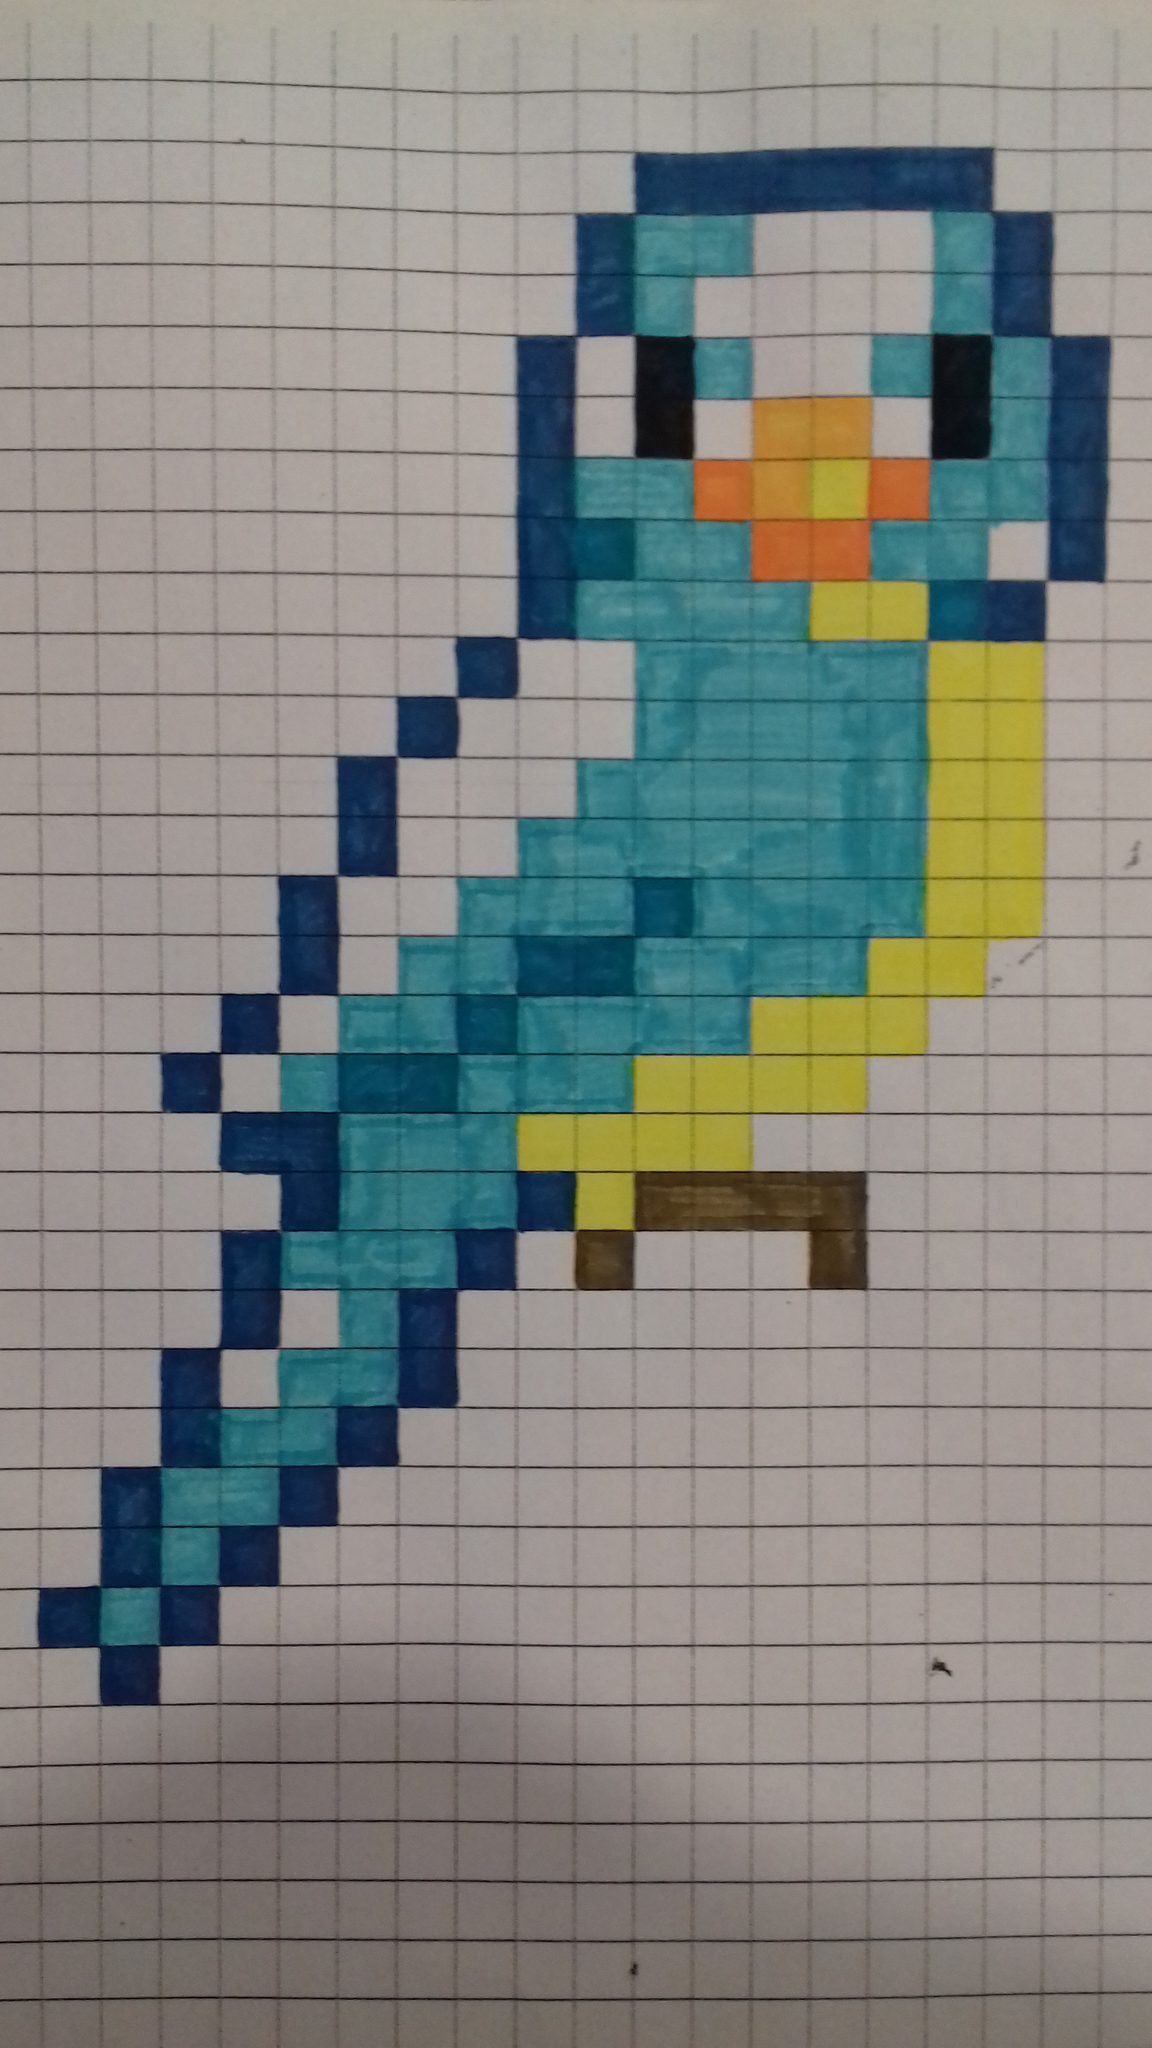 Pixel Art Oiseau intérieur Modele Dessin Pixel